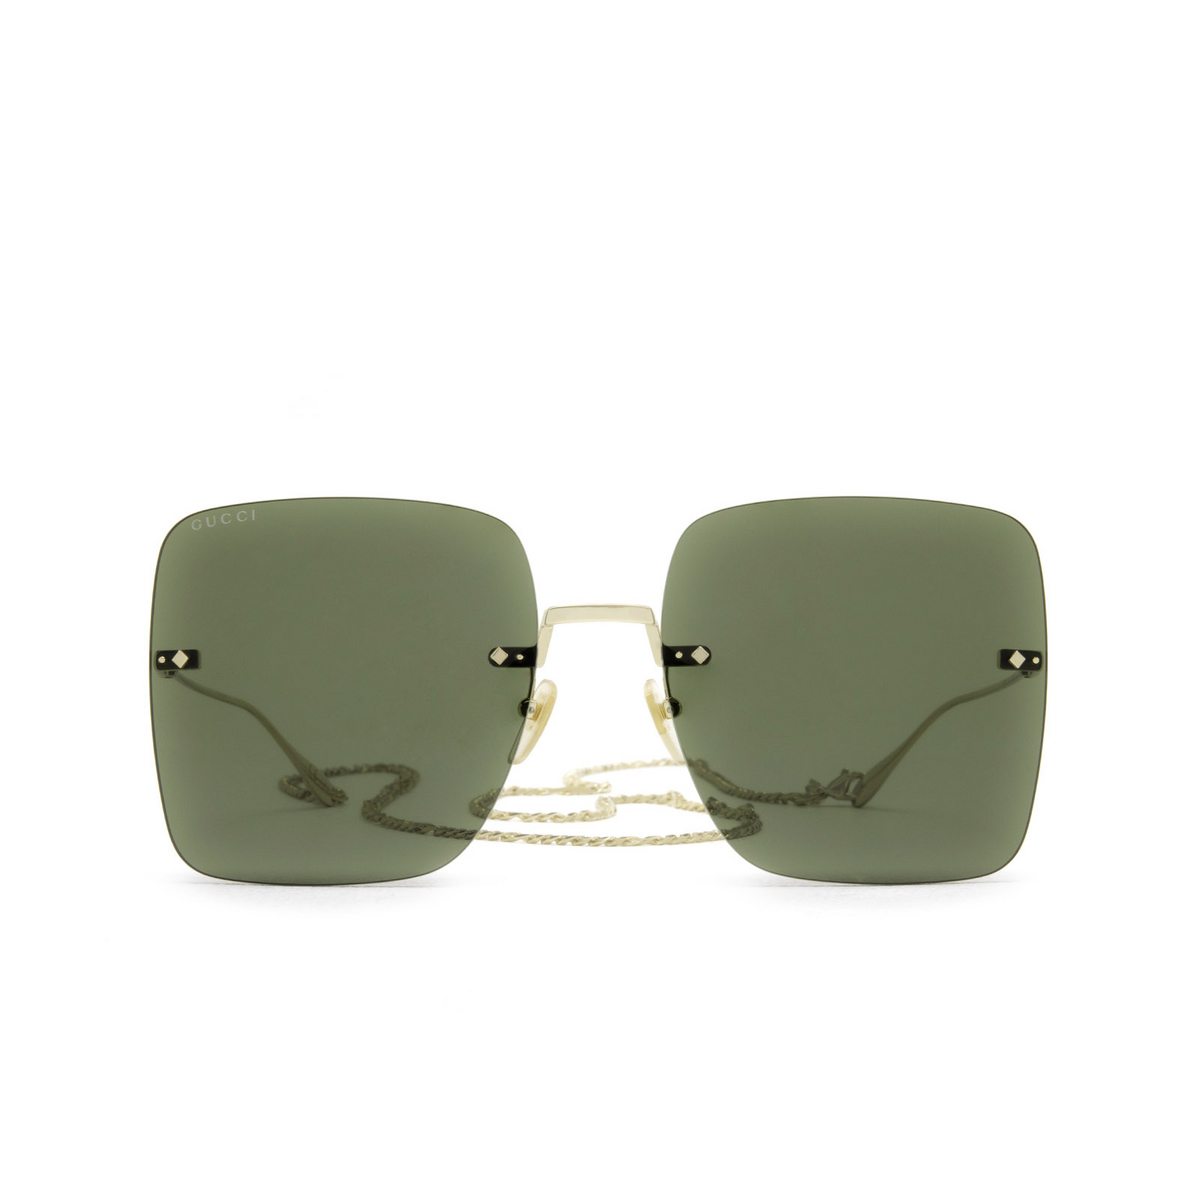 Gucci® Square Sunglasses: GG1147S color Gold 002 - front view.